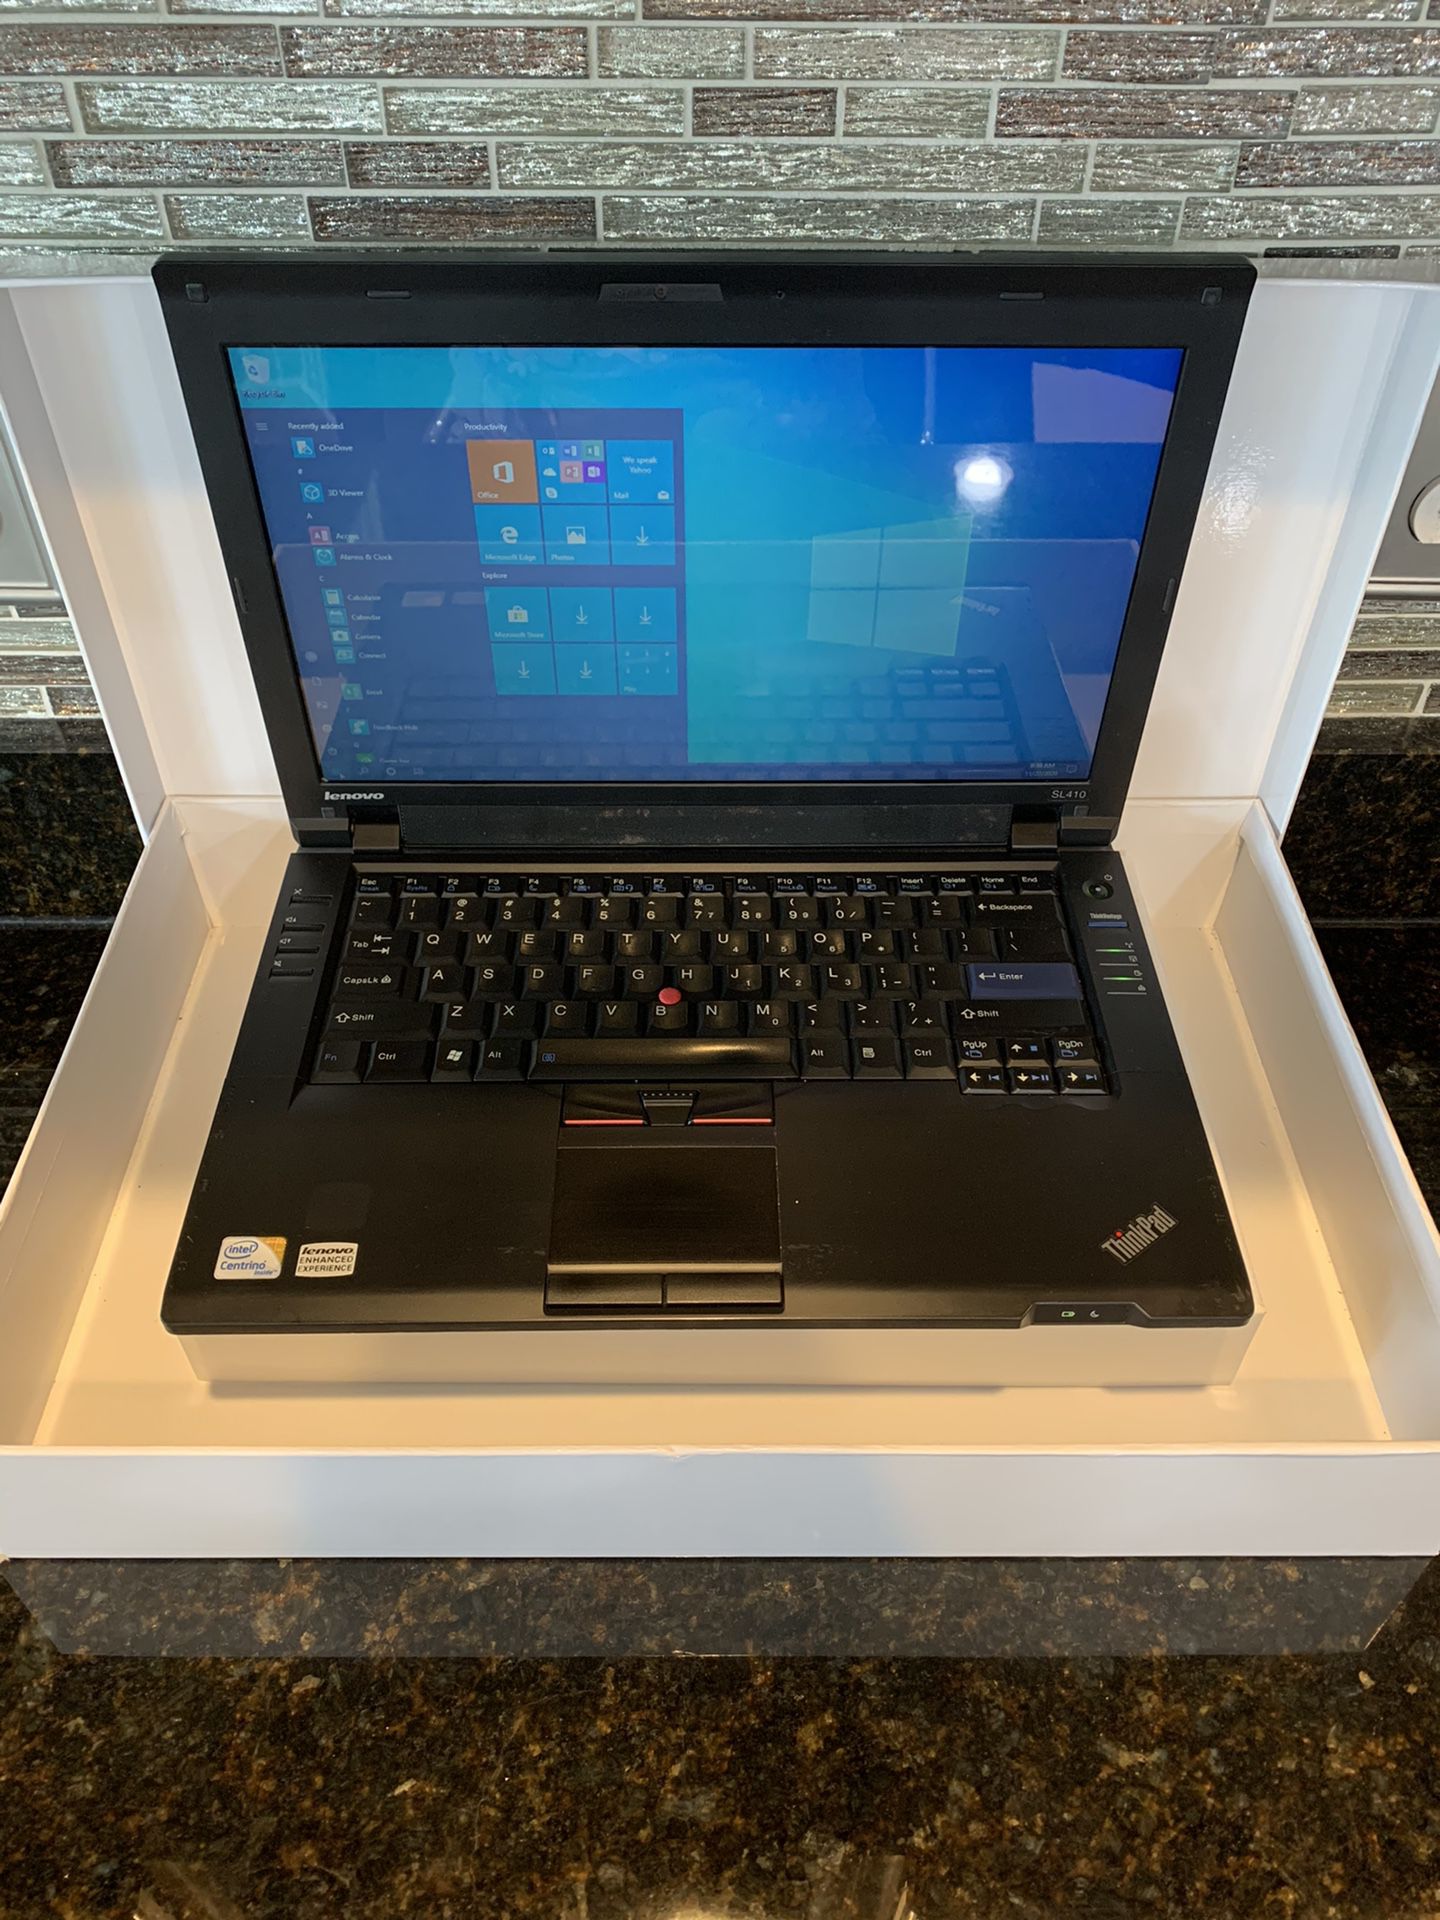 14” Lenovo SL410 Thinkpad Laptop with HDMI, Webcam, Windows 10 and Microsoft Office